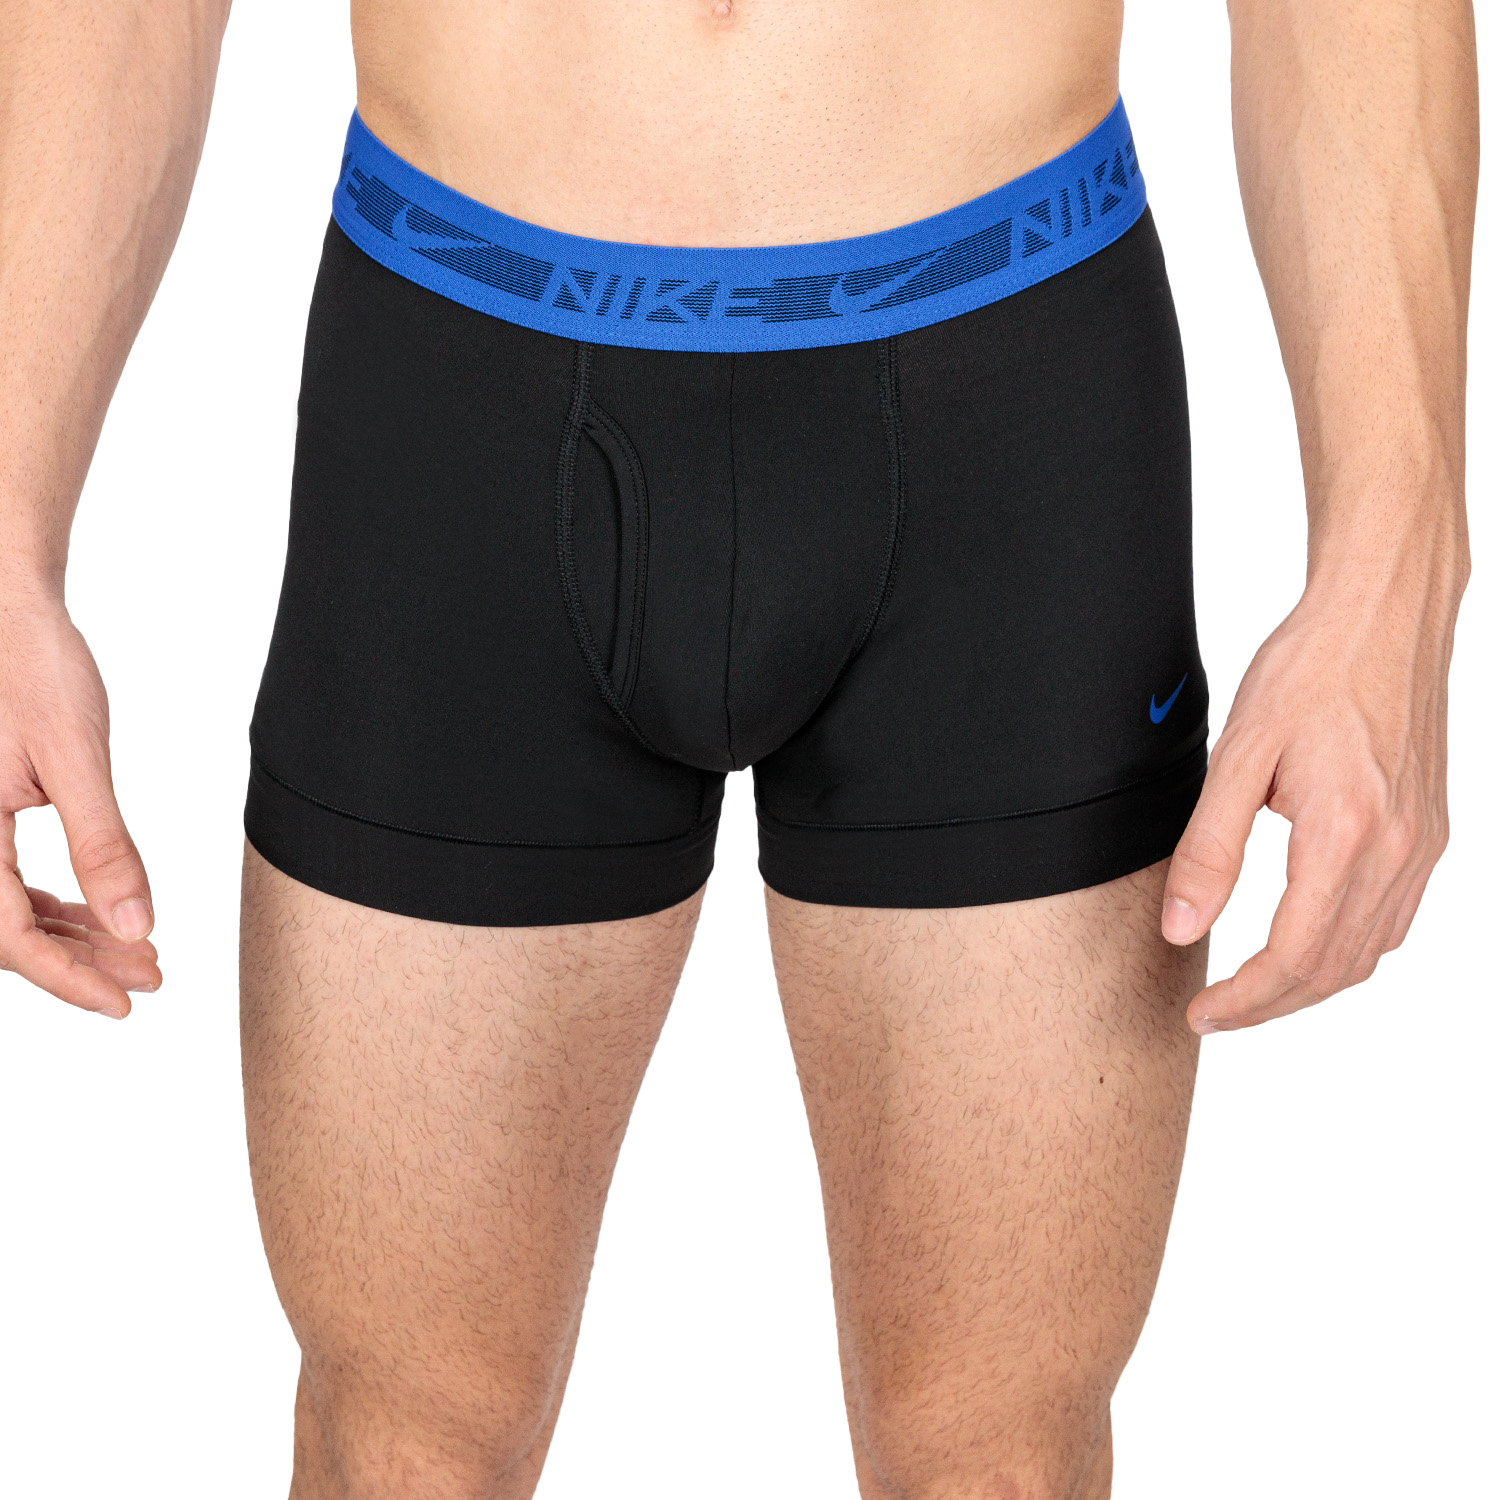 Adidas Men's Performance Boxer Brief Underwear (3-Pack) - Grey/Black/Royal  